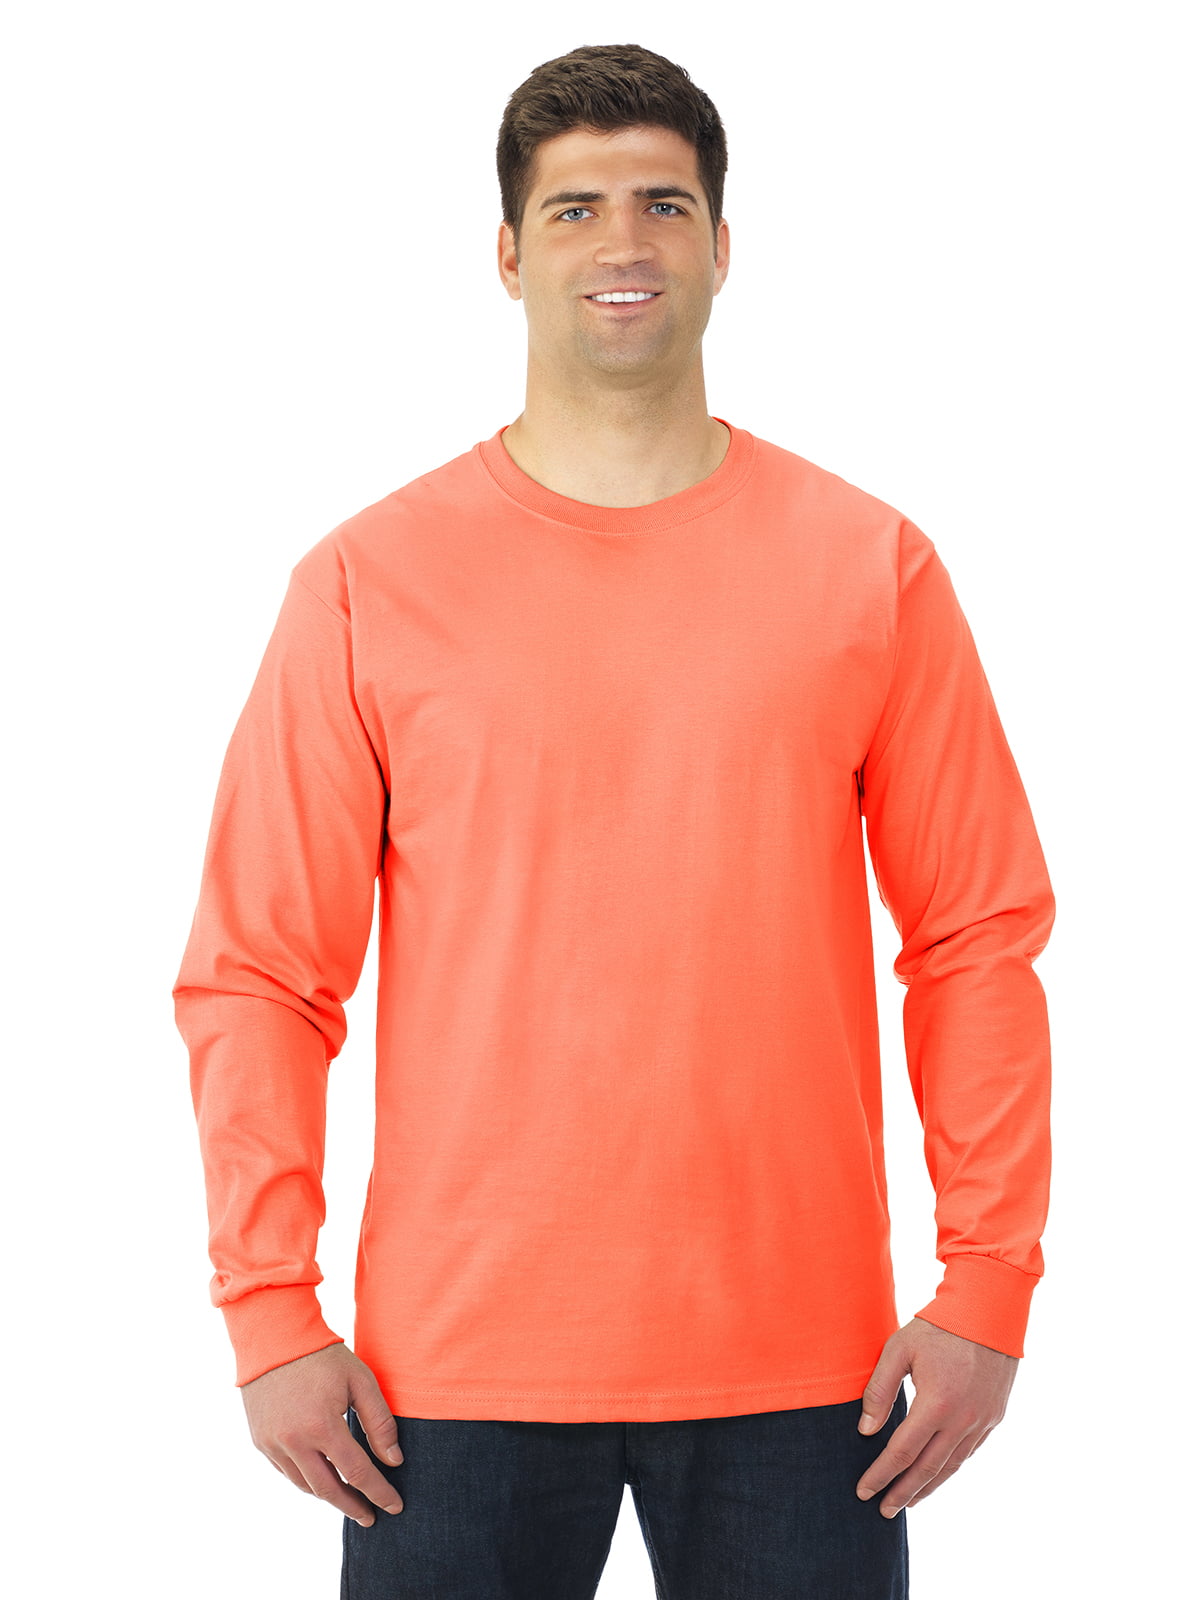 Vineyard Vines Men’s Coral Long Sleeve T-shirt Size 2XL